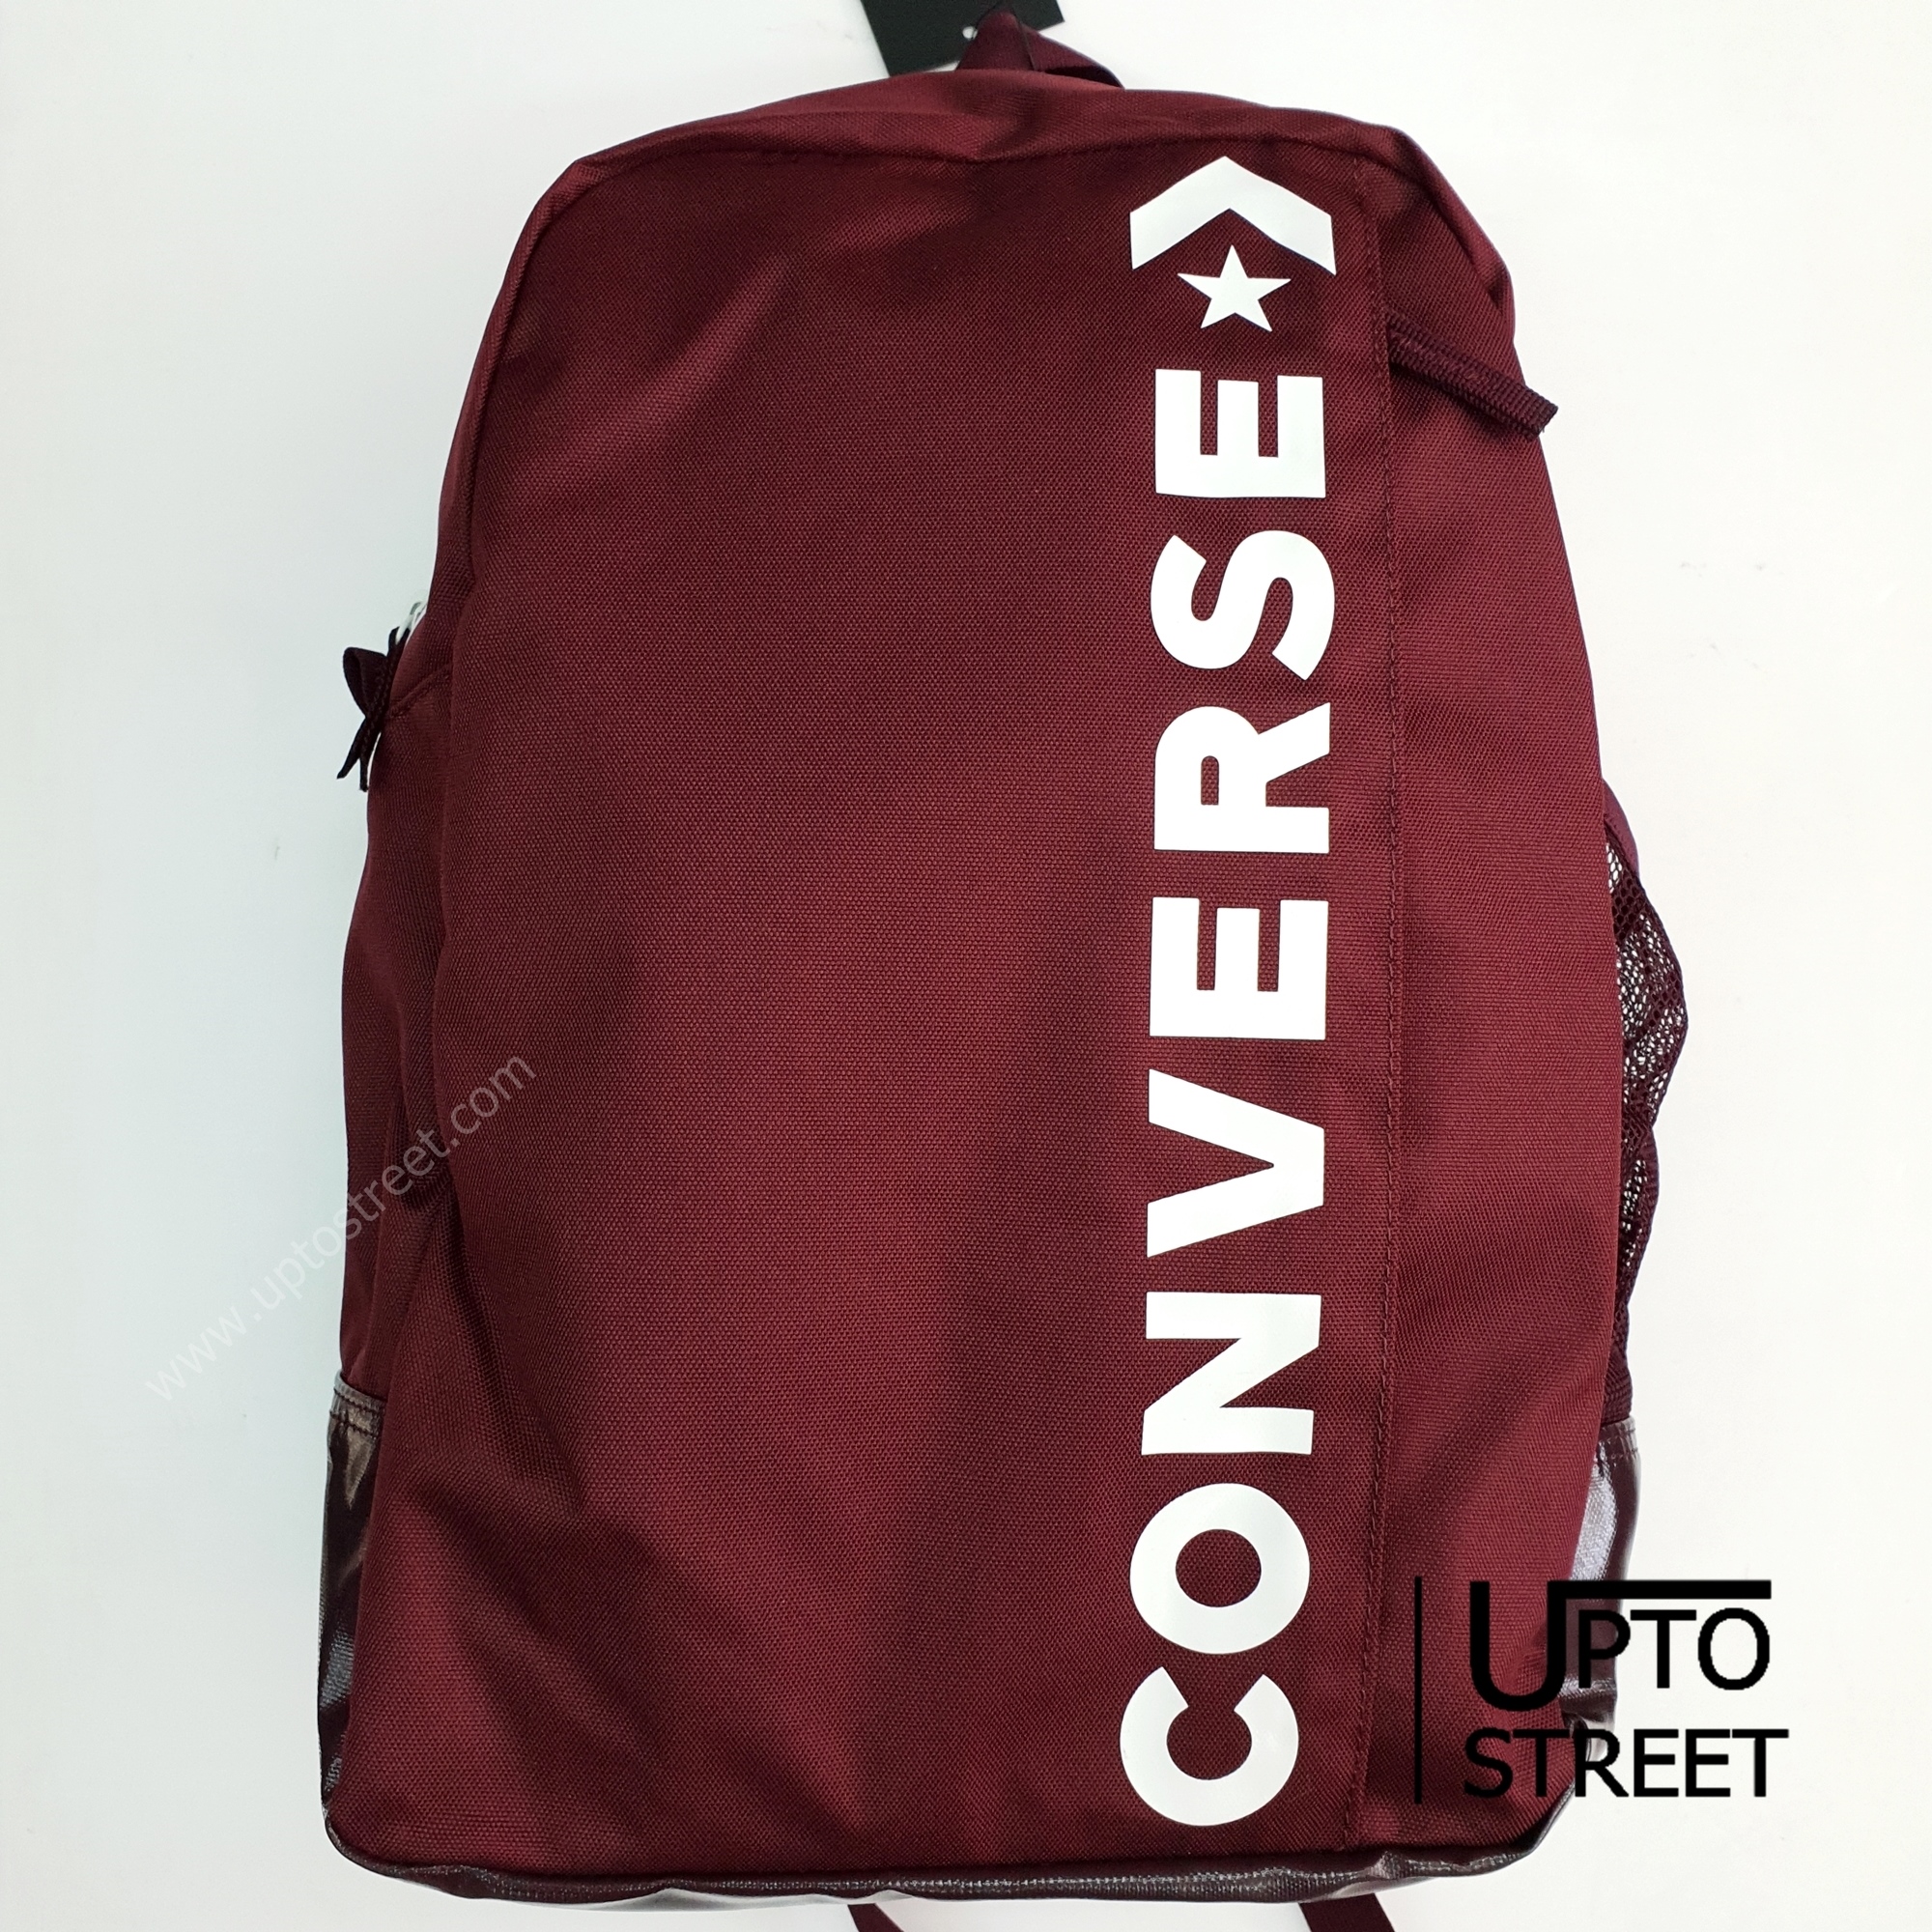 converse maroon backpack